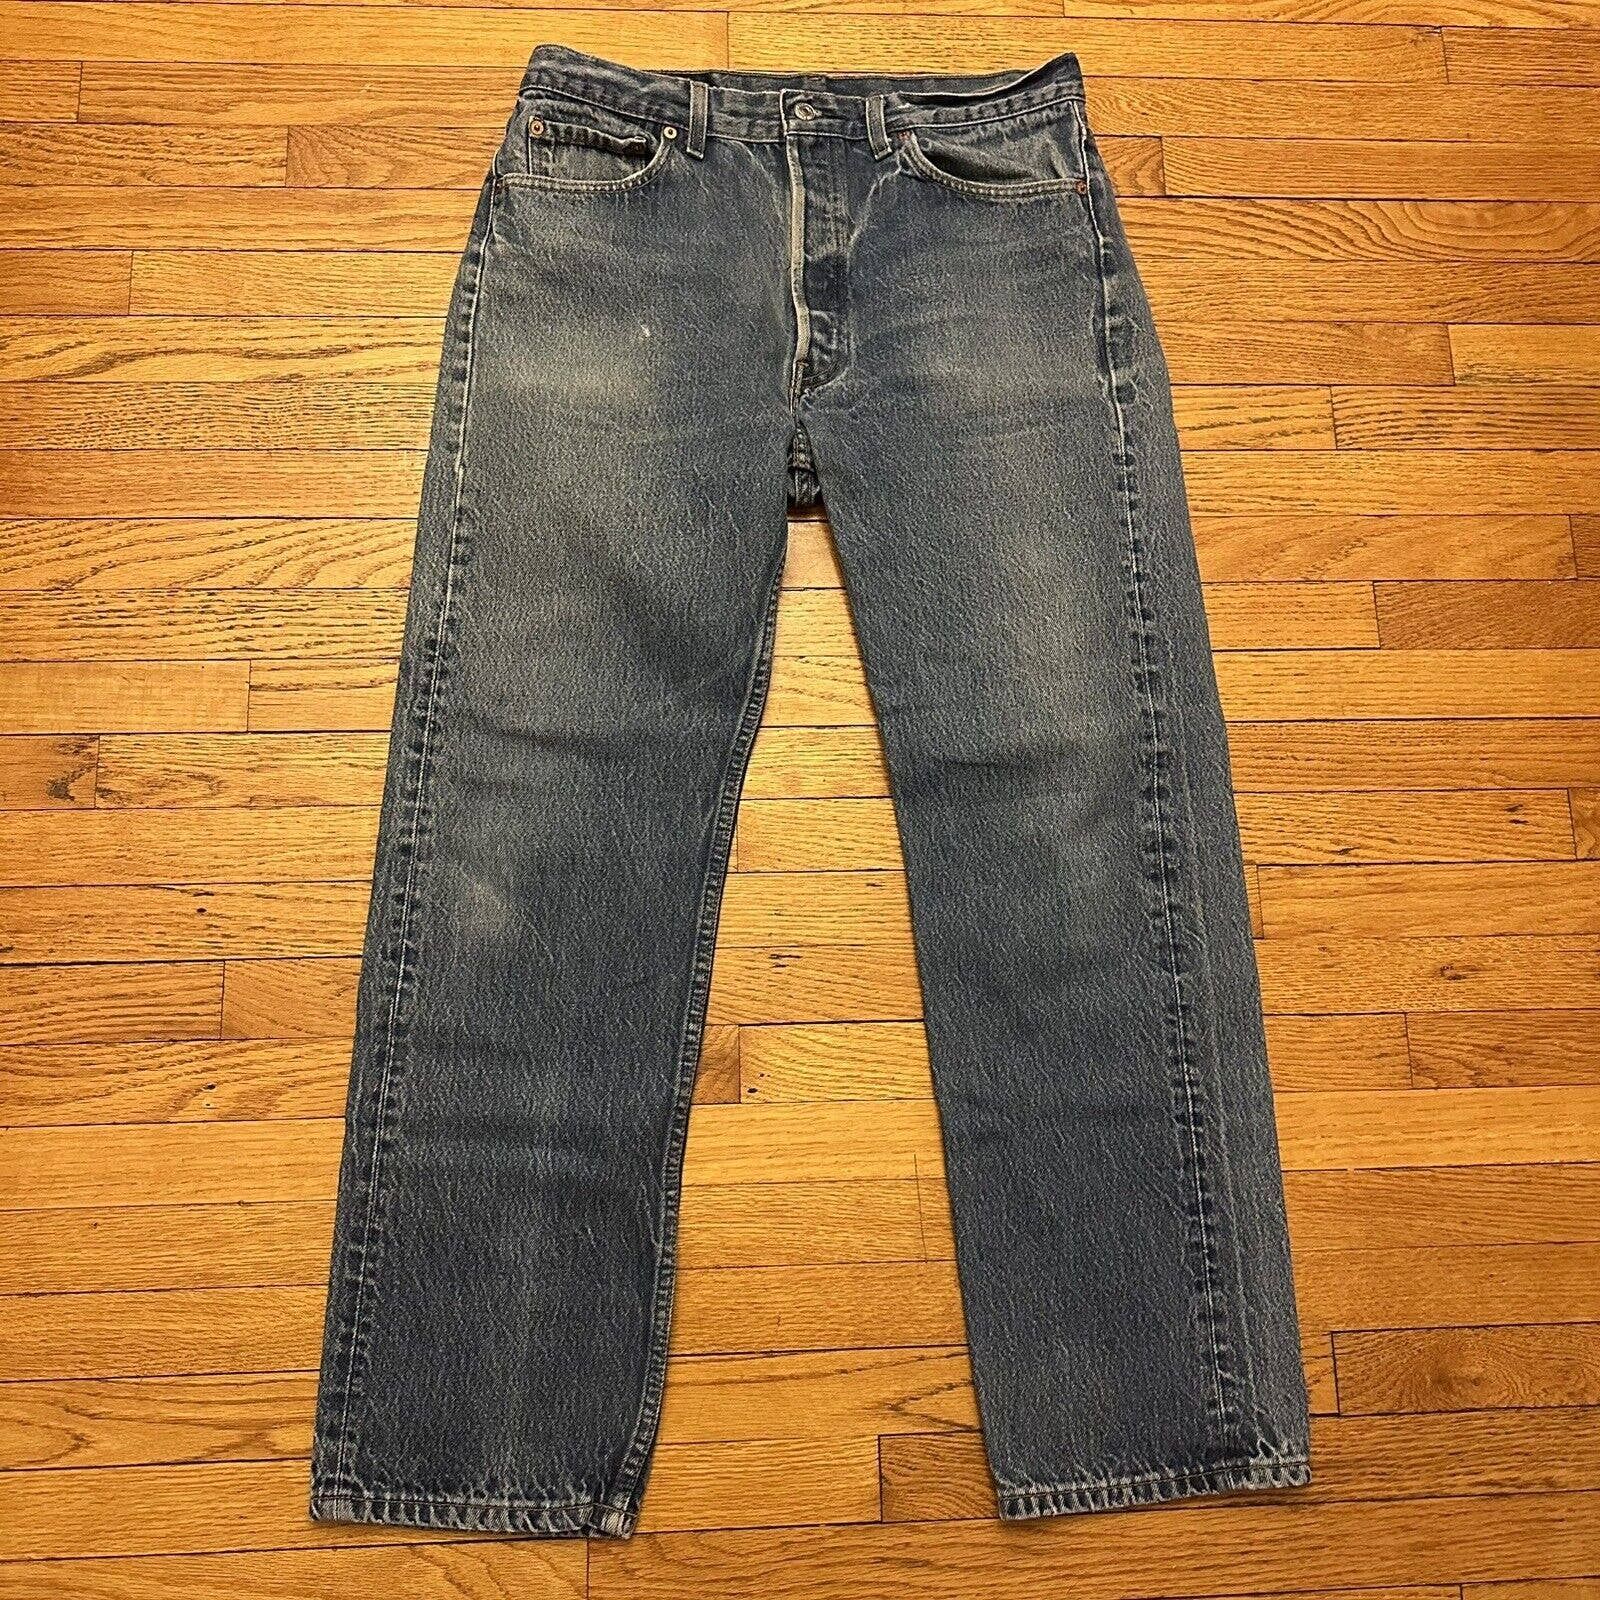 Vintage Vintage Levi’s 501 Blue Denim Jeans Size 36x34 Made In USA Size US 36 / EU 52 - 1 Preview